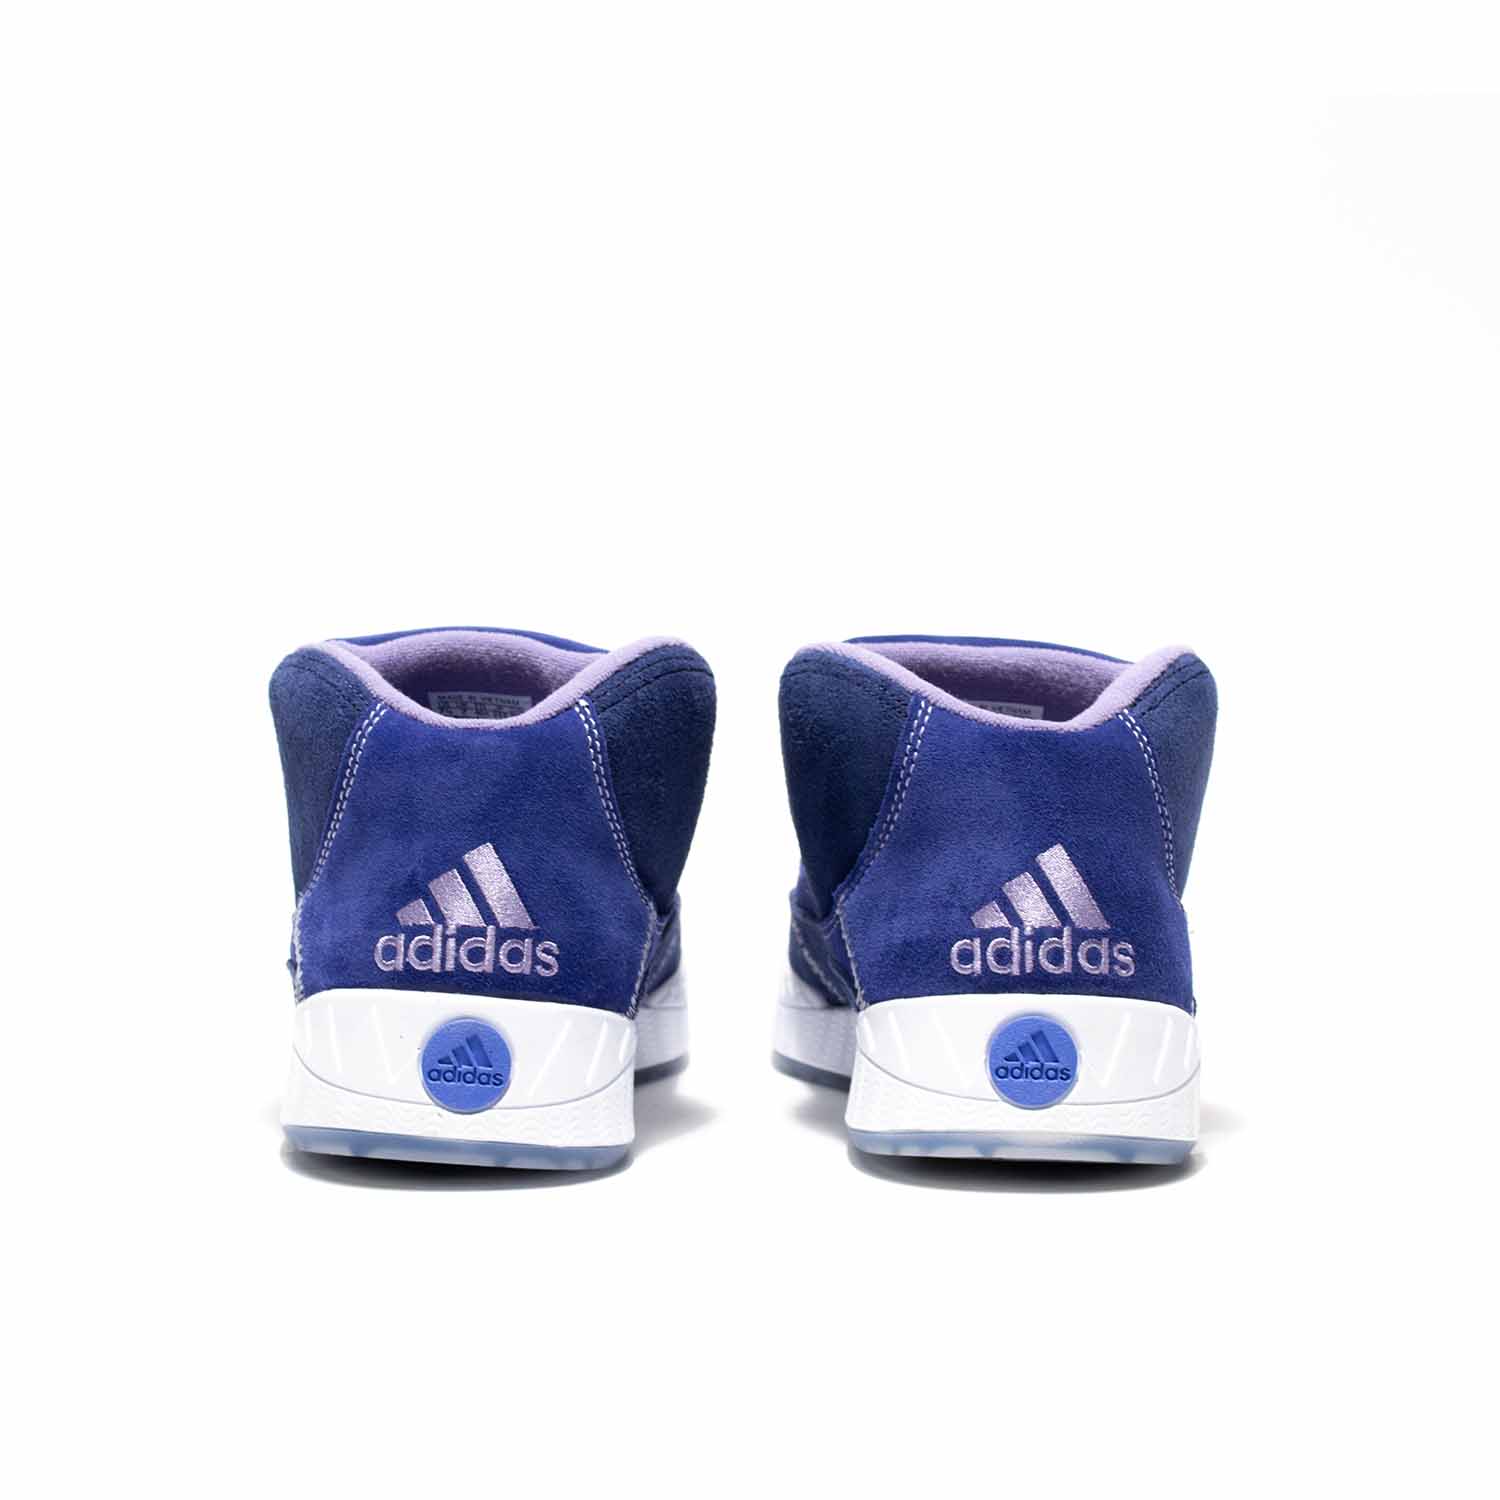 Adidas Adimatic Mid x Maite - VICBLU/MAGLI - KCDC Skateshop